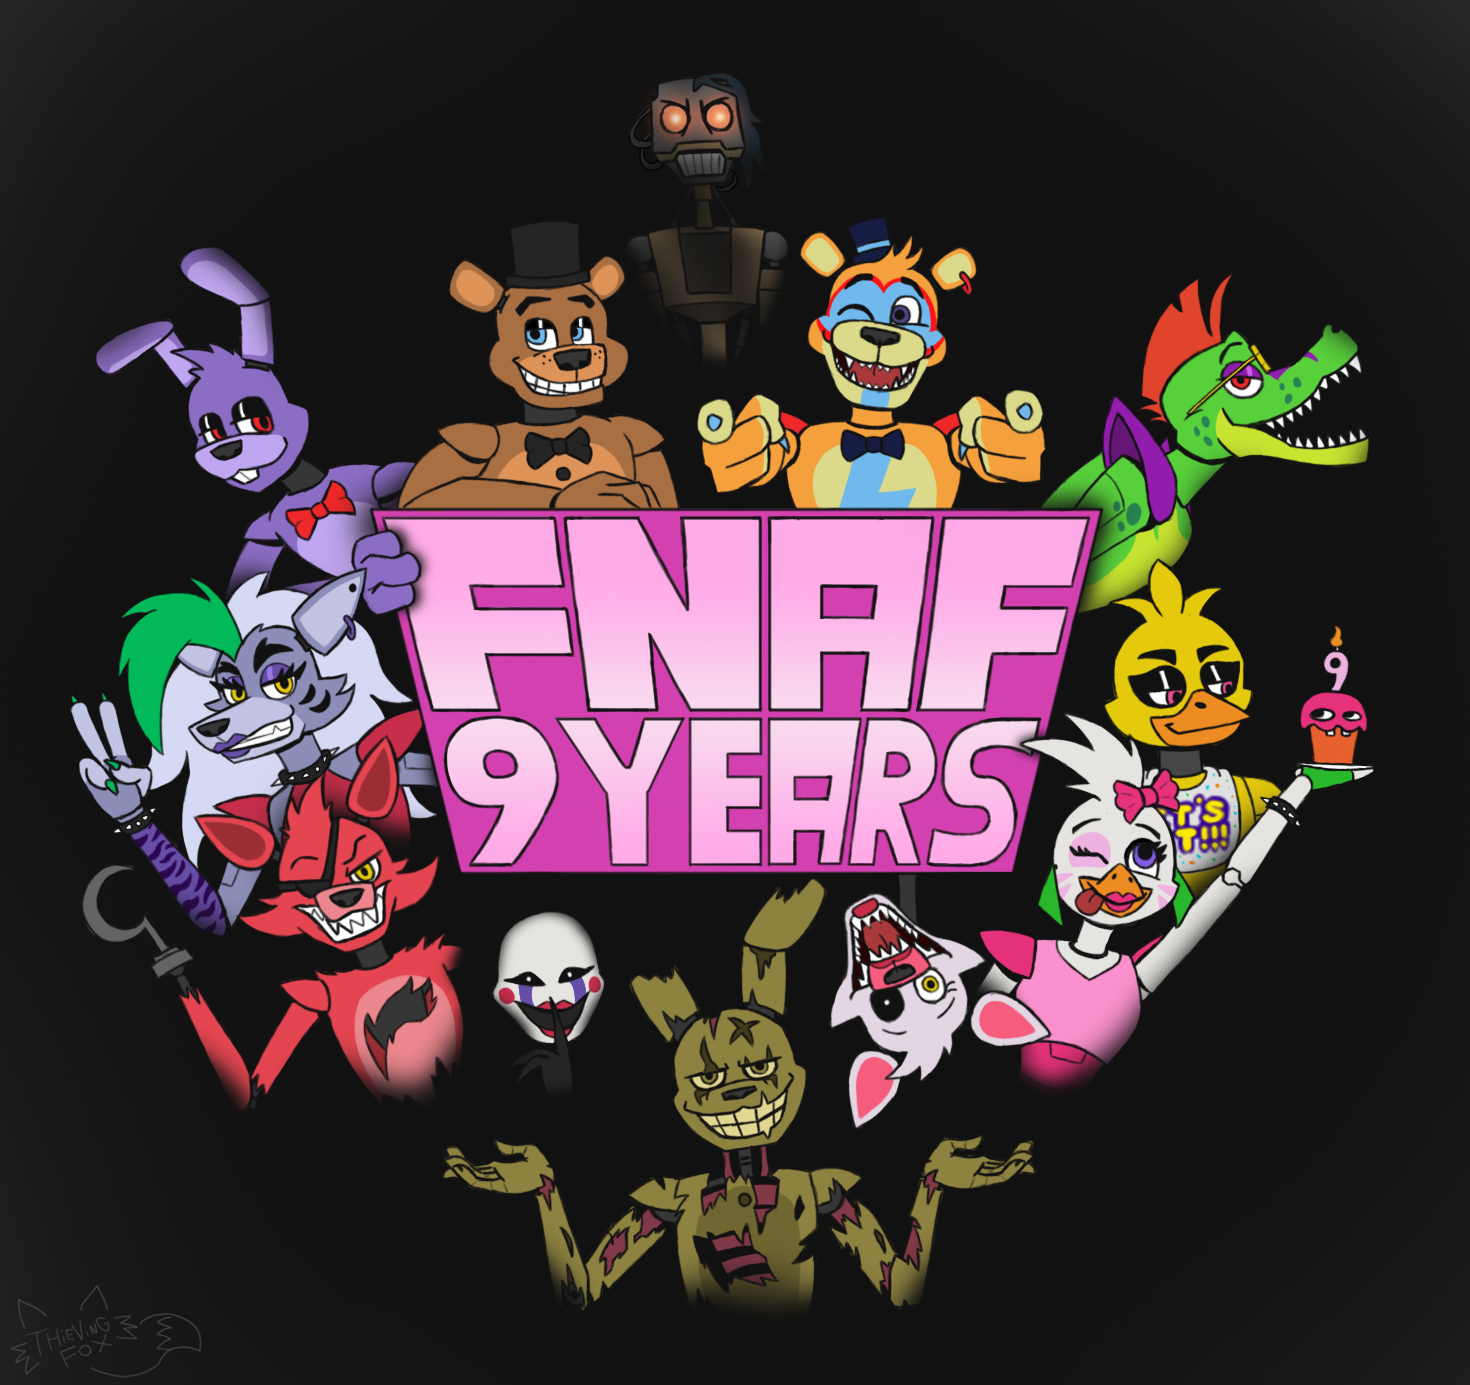 FNAFNG_FNAF 6 Characters by NamyG on DeviantArt